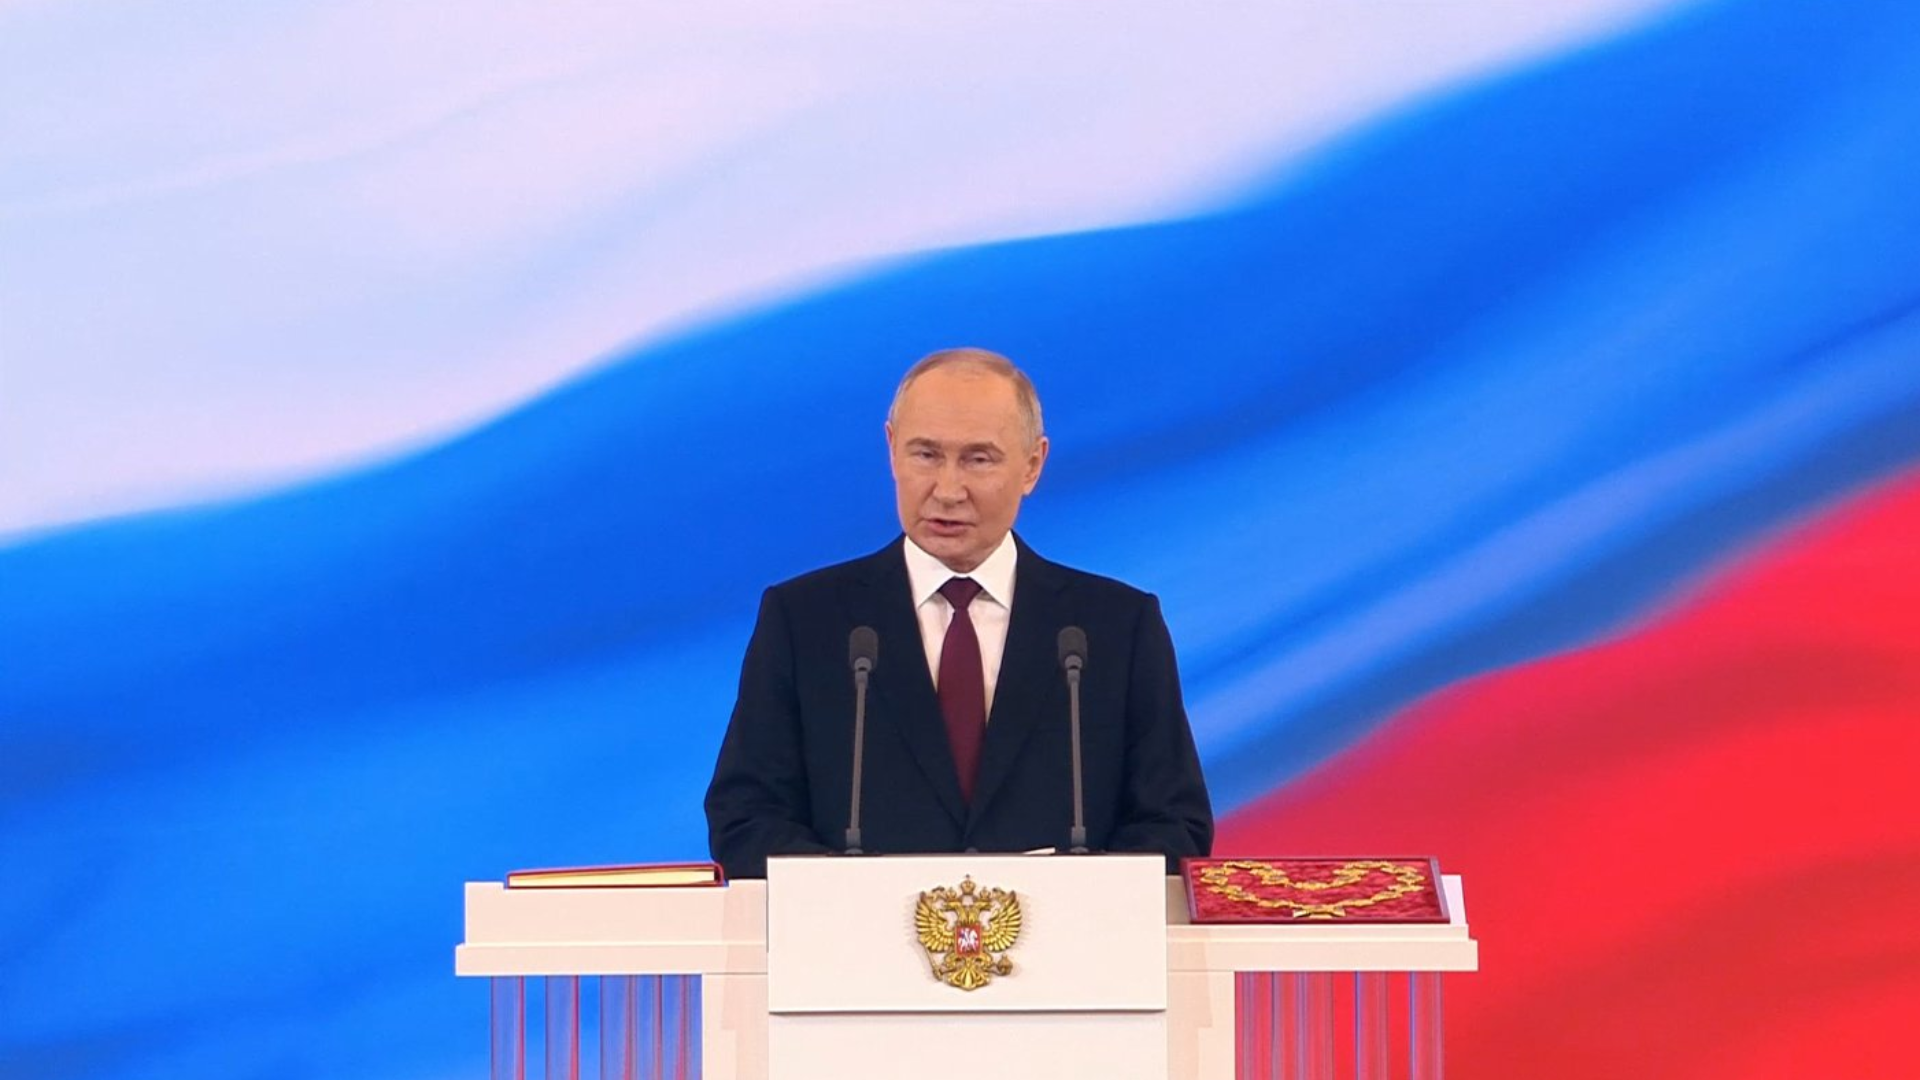 Vladimir Putin Sworn In For The 5th Term as Russian President